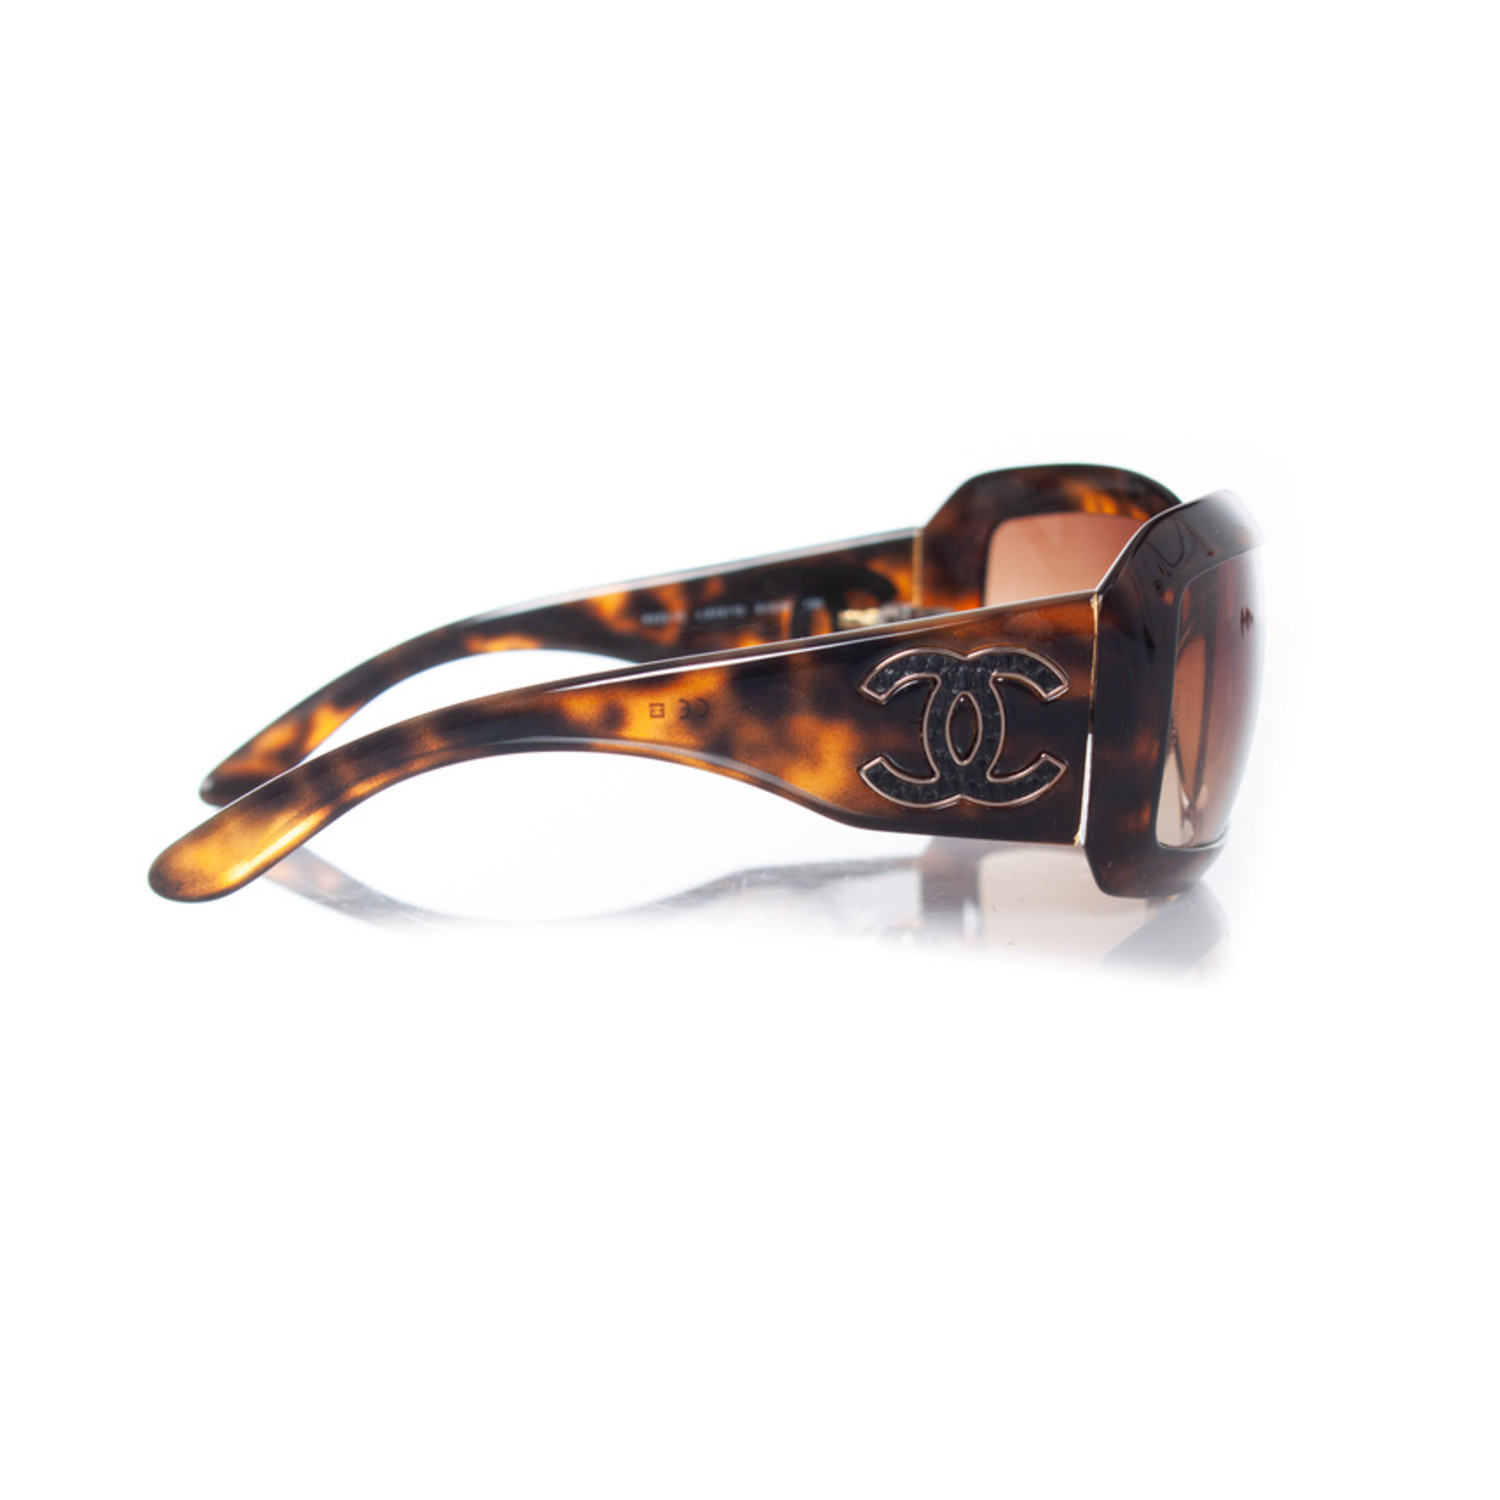 Chanel sunglasses-Square gold frame w/brown lenses  Chanel sunglasses,  Chanel accessories, Sunglasses accessories